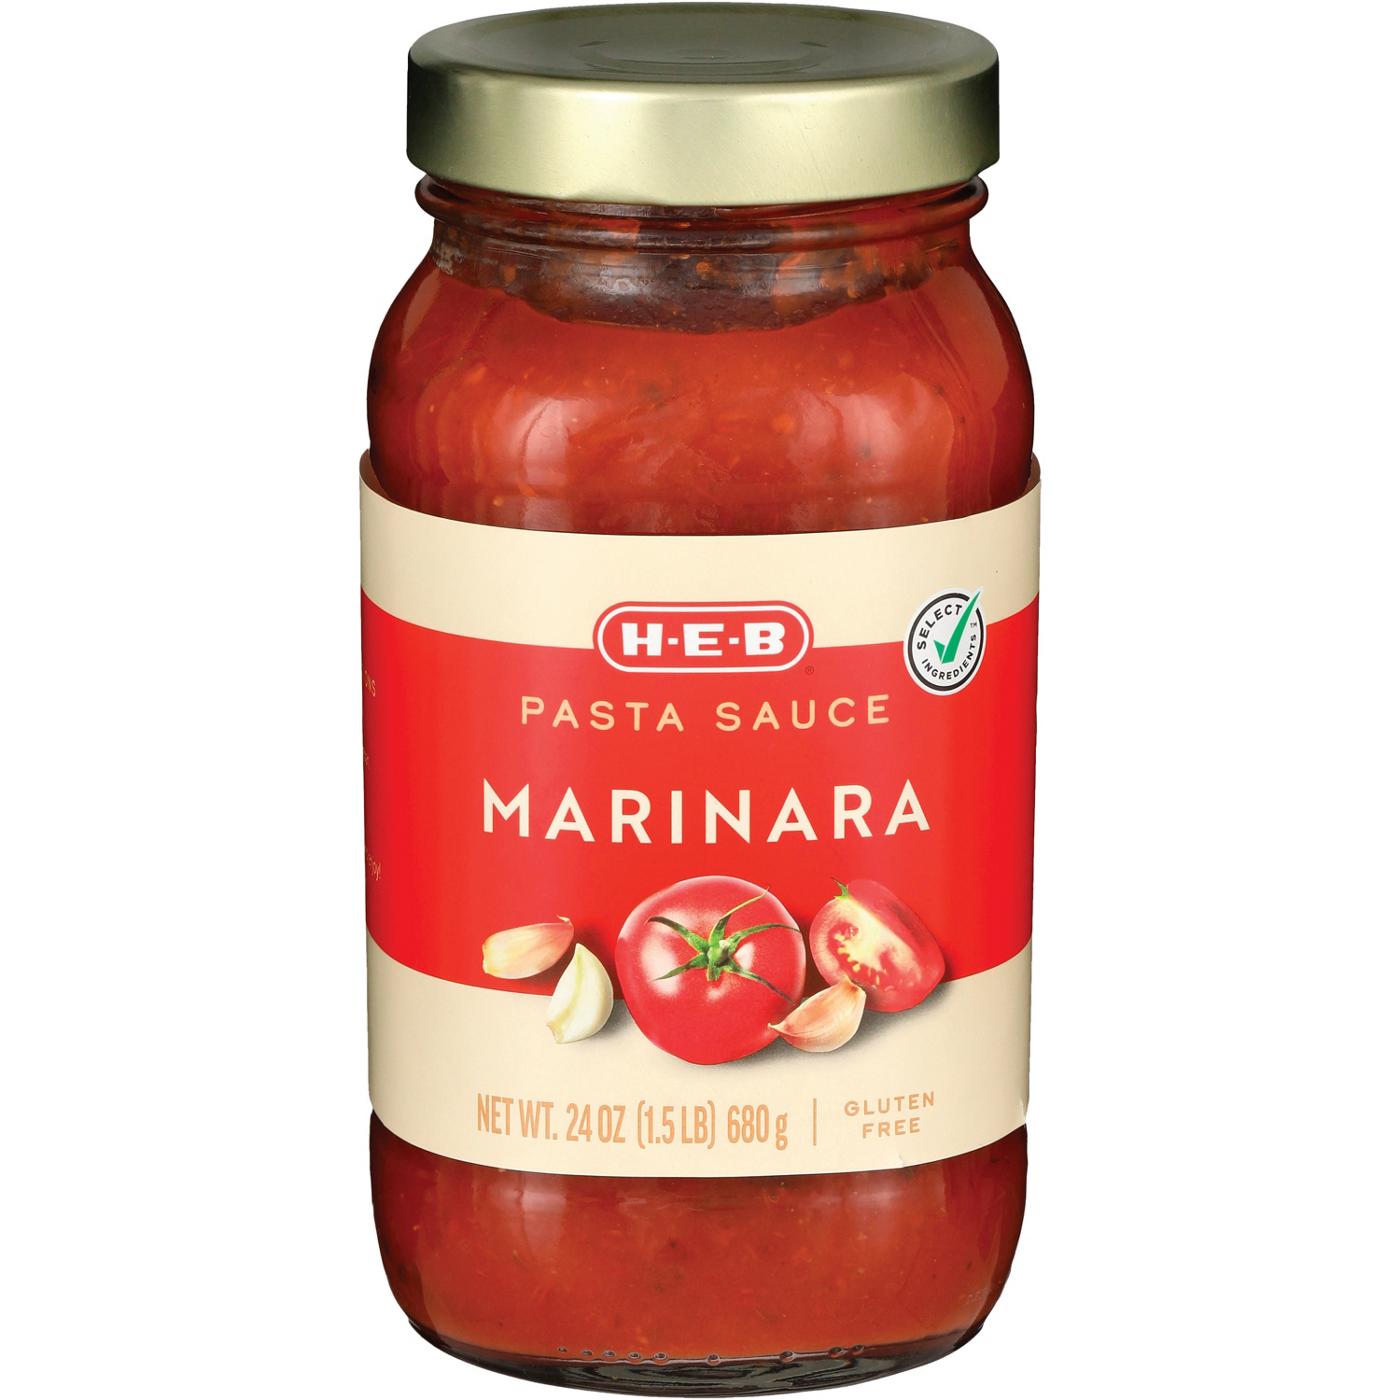 H-E-B Marinara Pasta Sauce; image 2 of 2